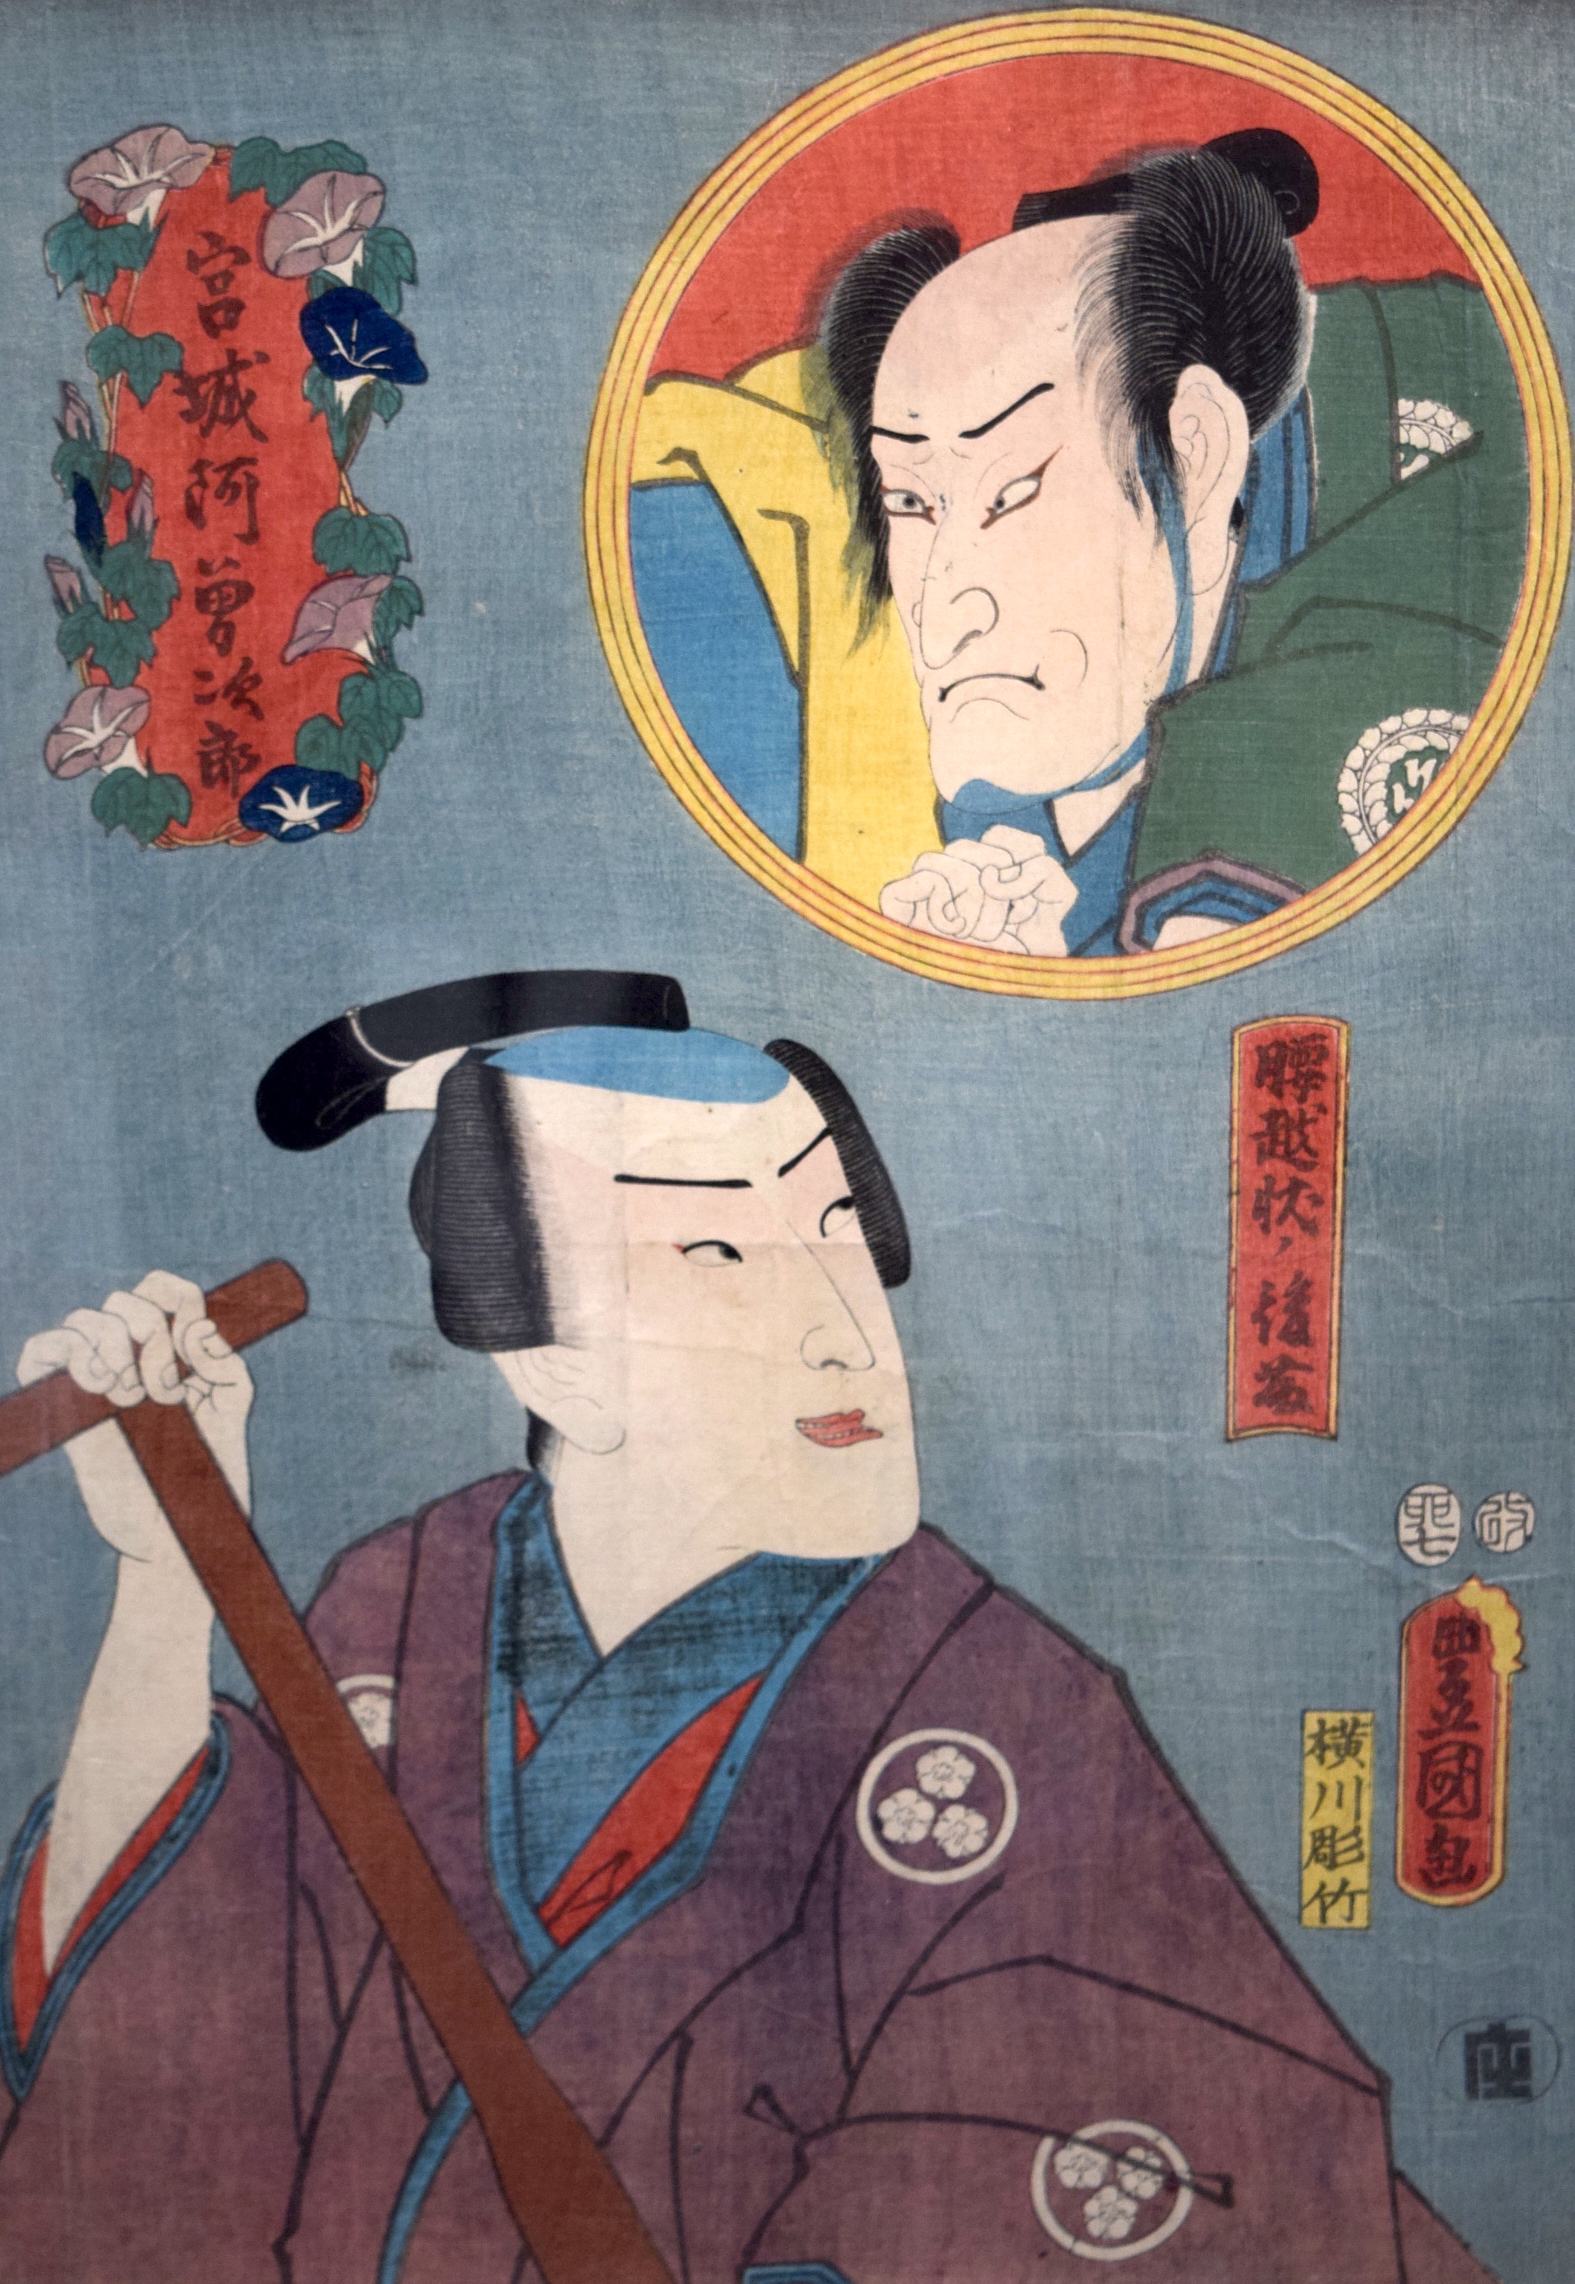 A 19TH CENTURY JAPANESE WOODBLOCK PRINT by Utagawa Kunisada (1786-1864) depicting the actor Nakamur